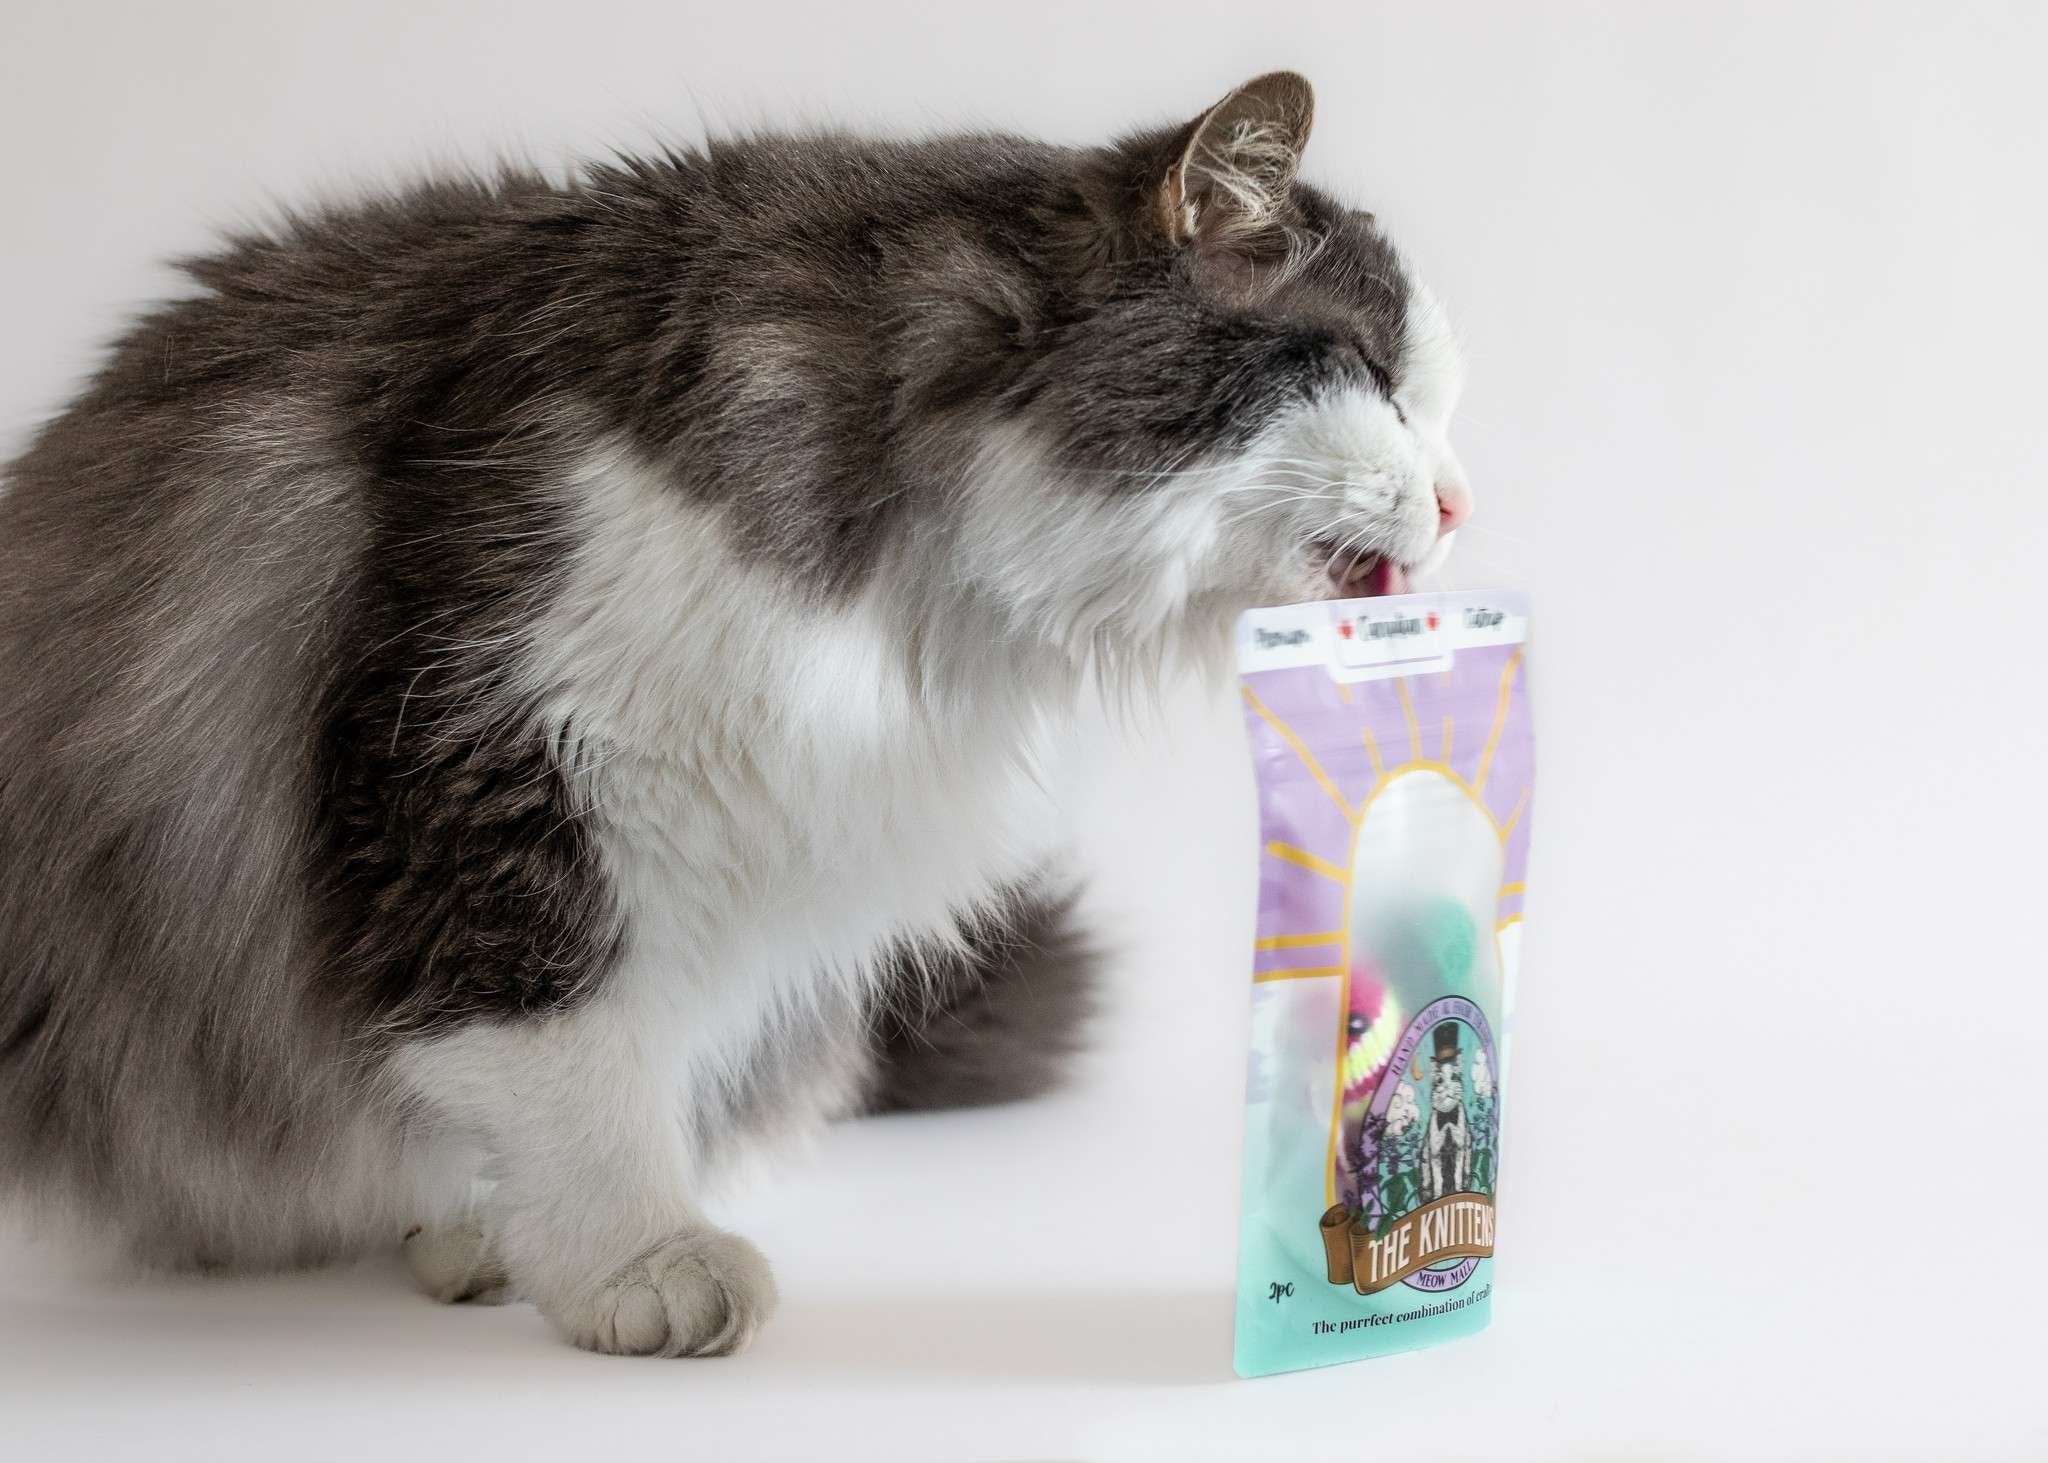 Cat licking cat toy